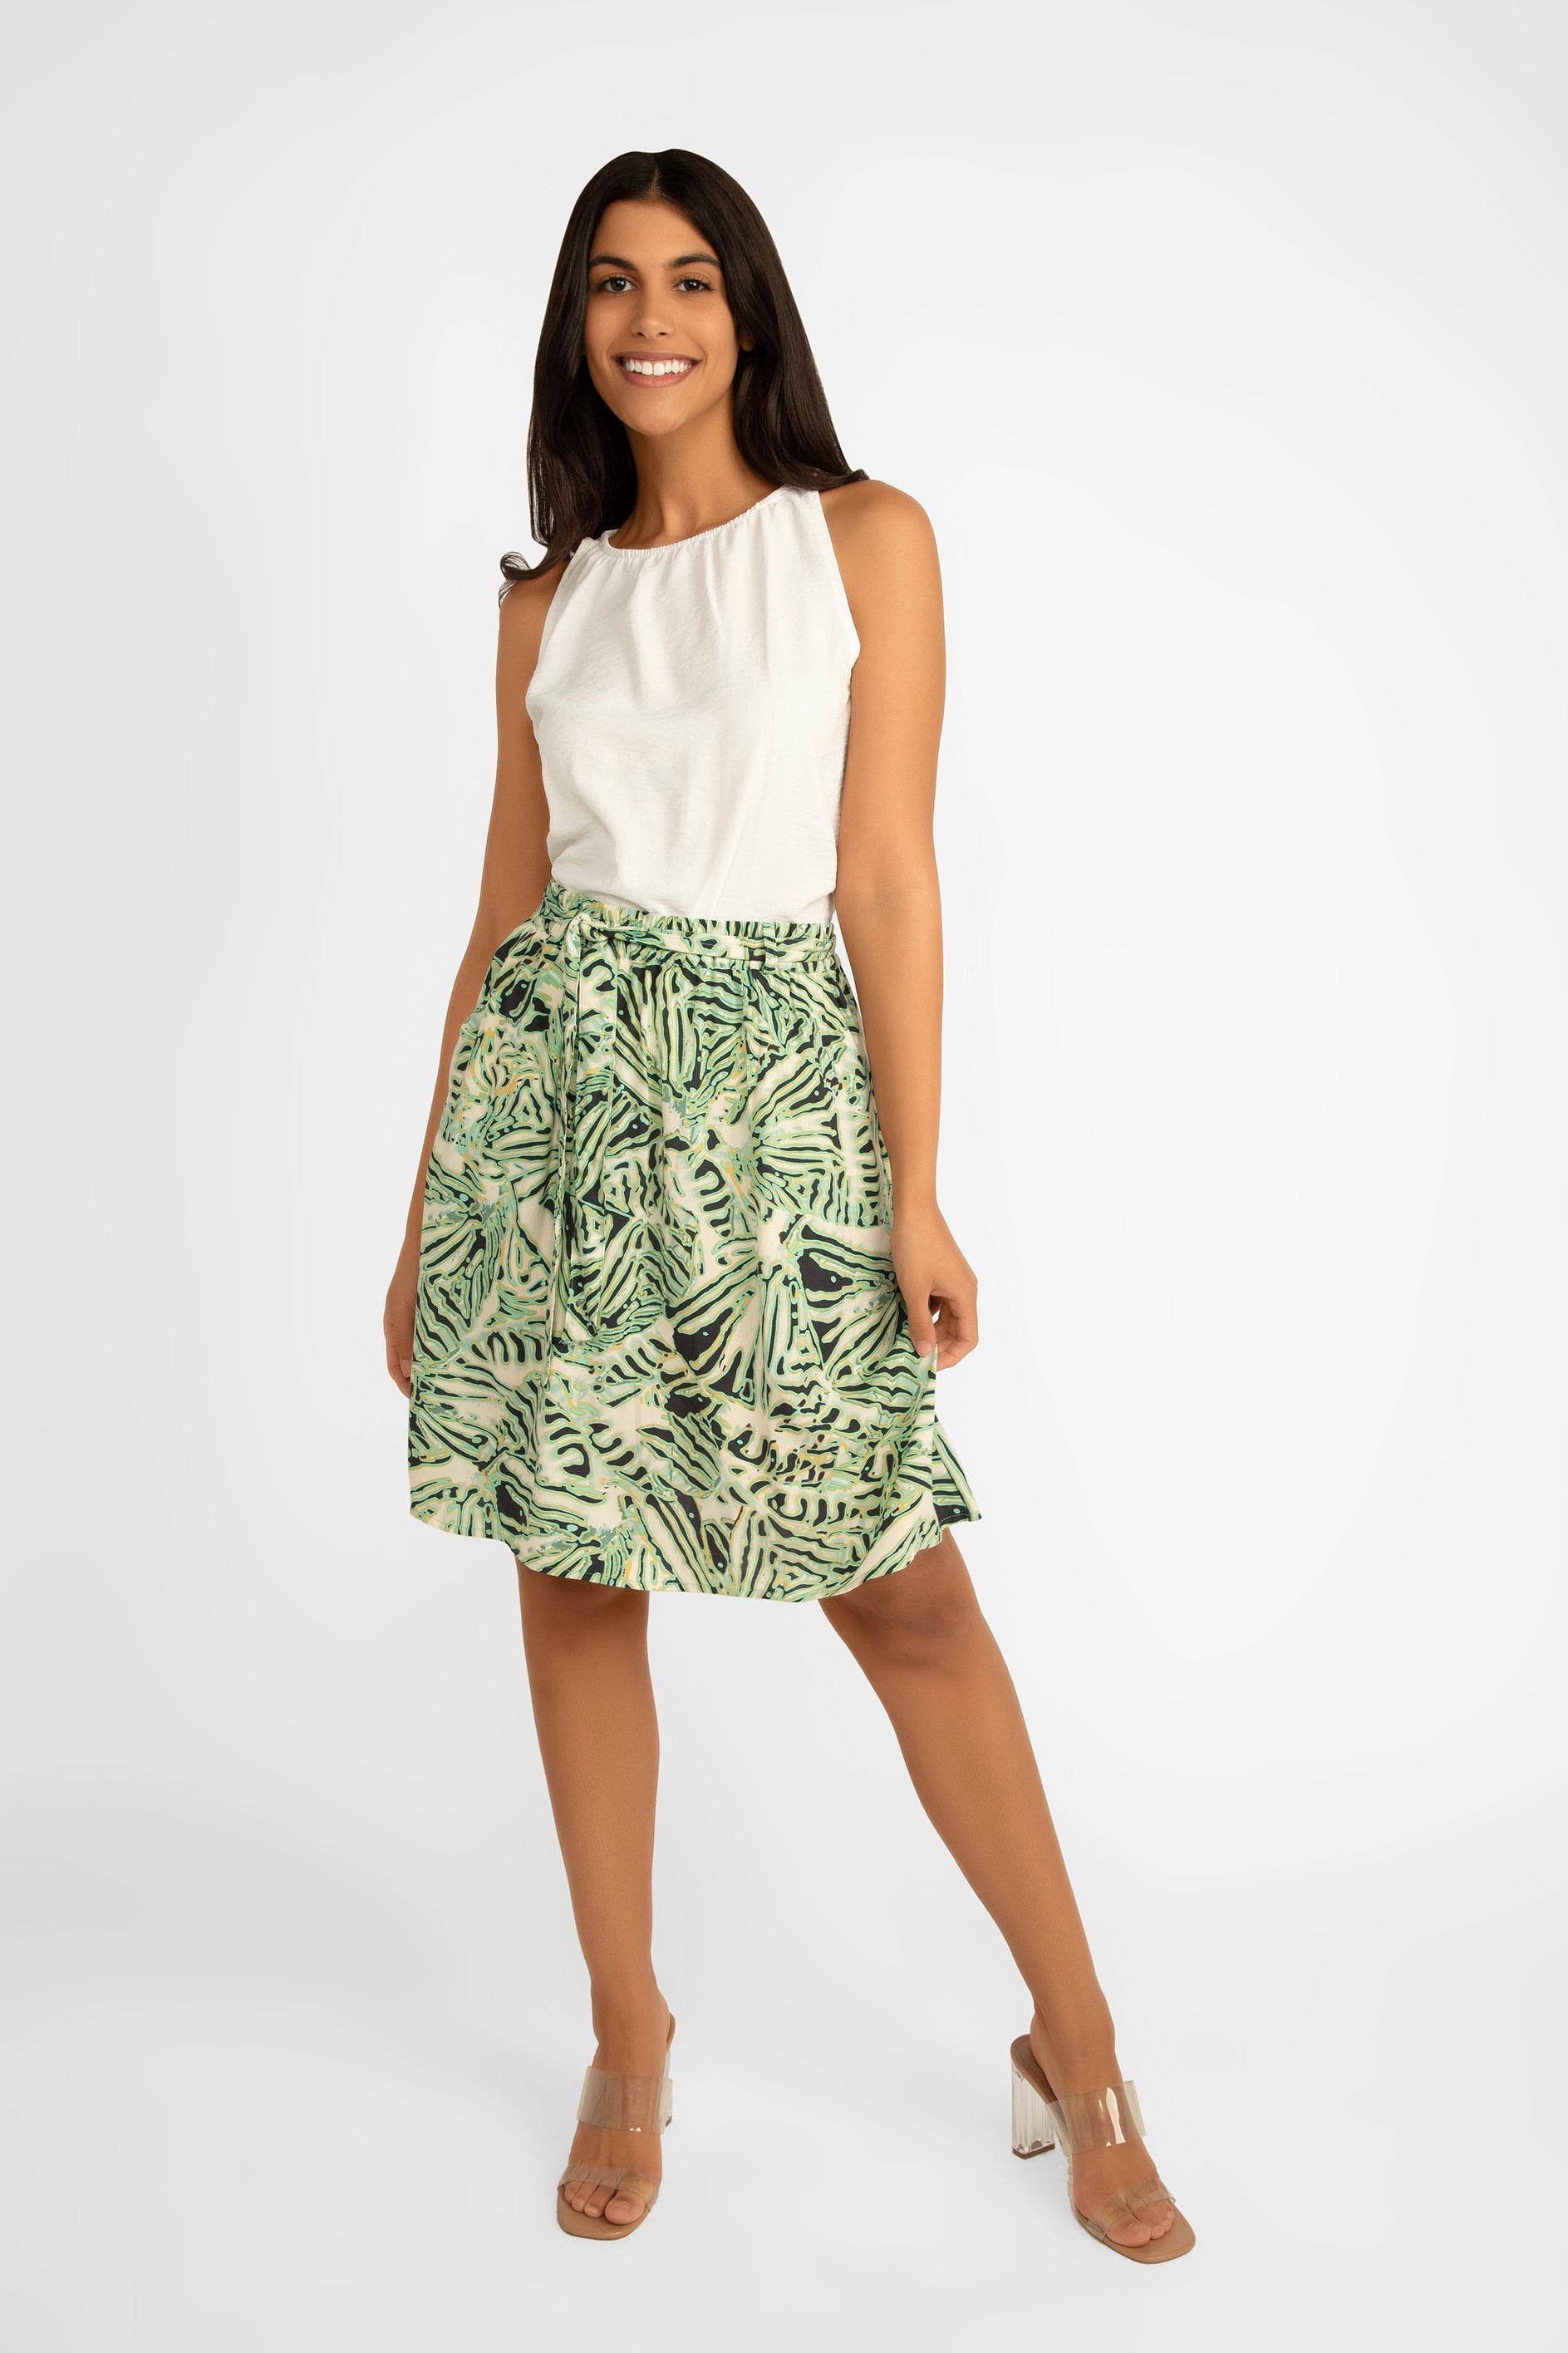 Soya Concept (40628) Aqua Print Knee Length Skirt with Removeable Tie Belt 